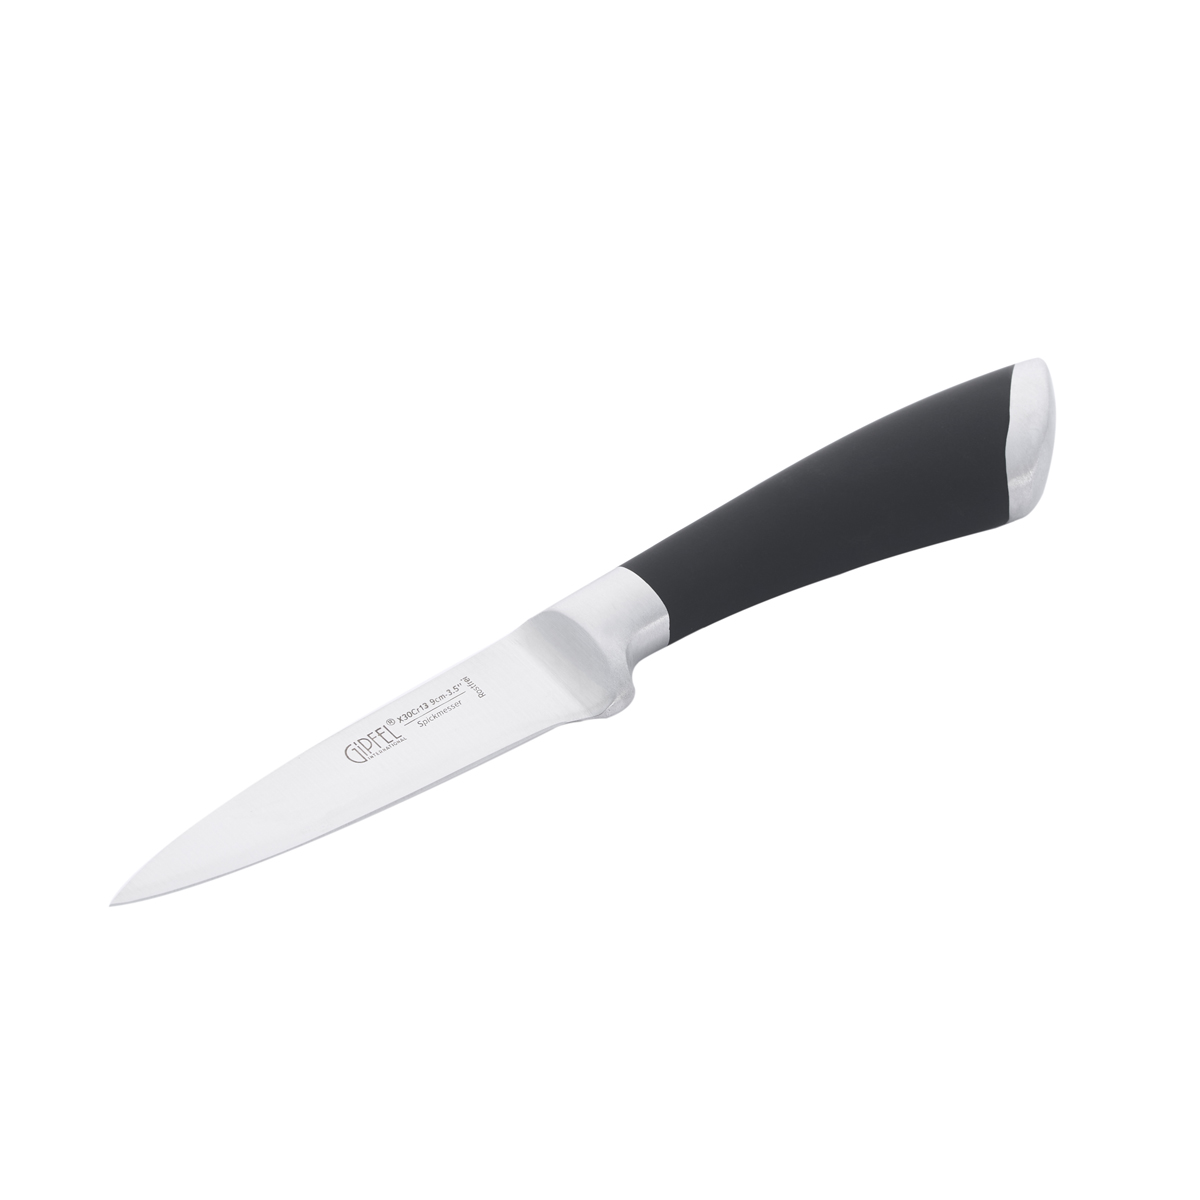 Нож для чистки овощей Gipfel Mirella 6840 9 см нож разделочный gipfel mirella 6837 20 см